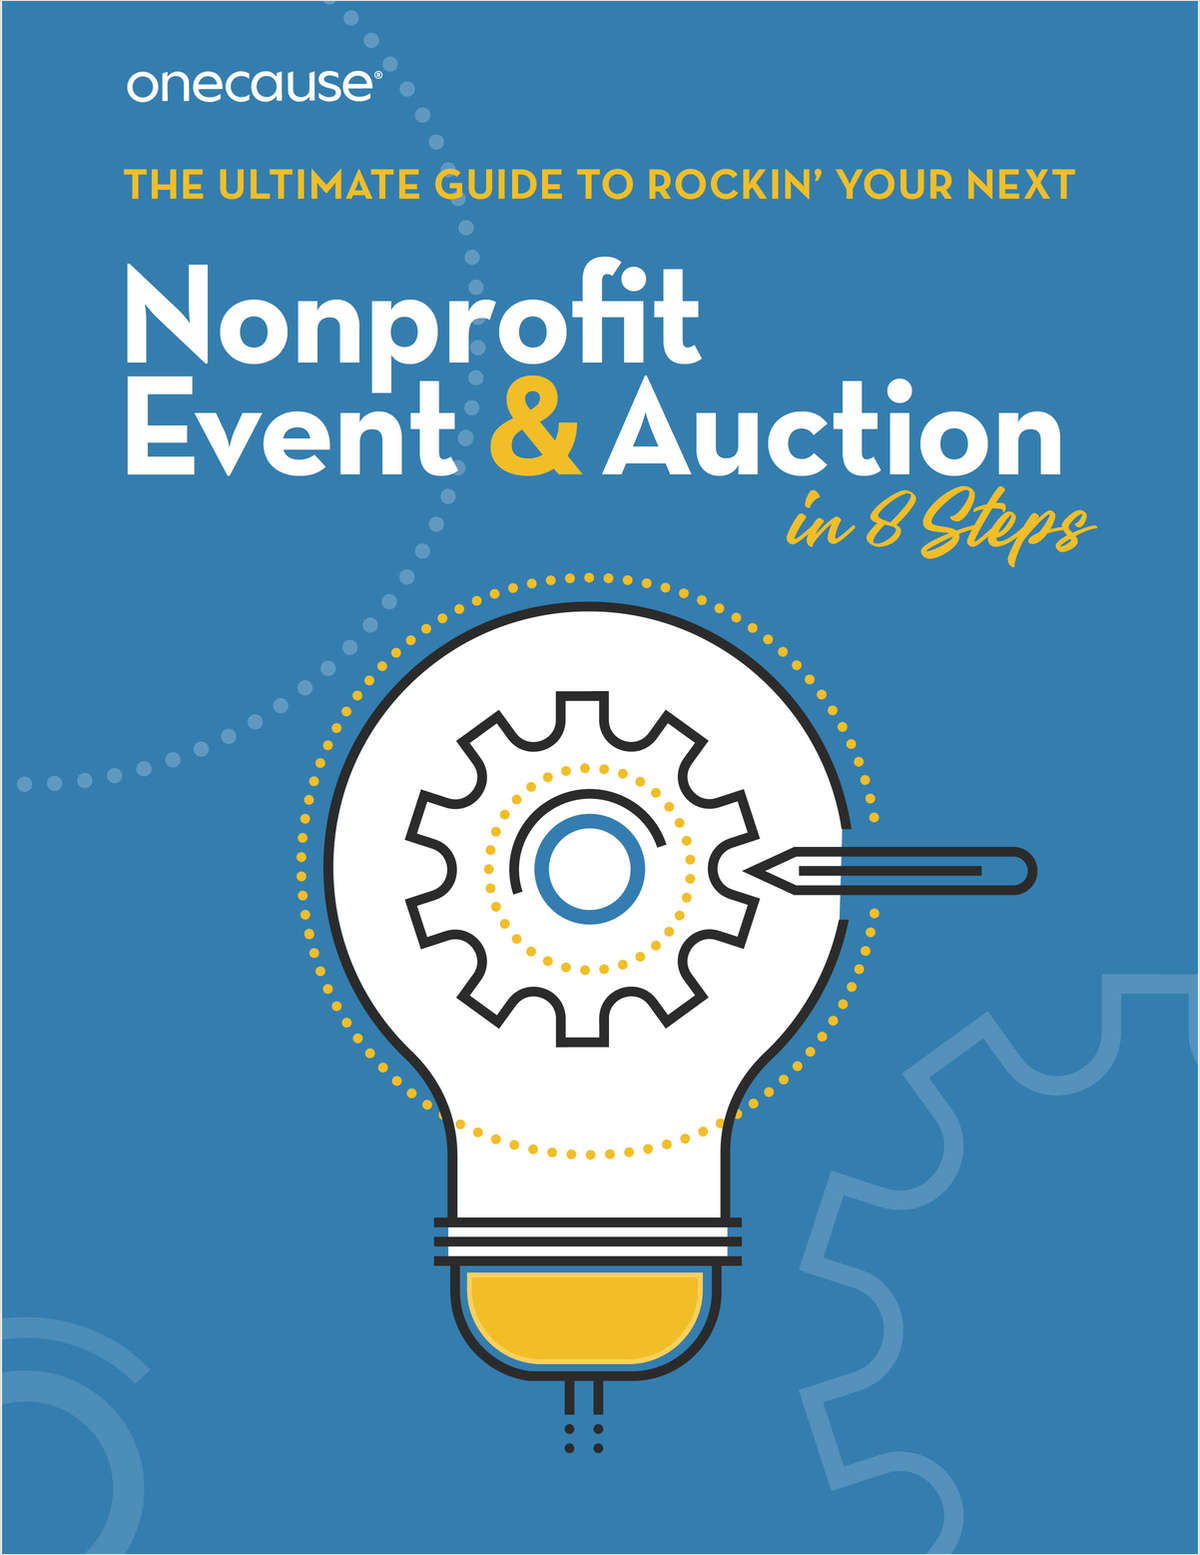 Rockin' Your Next Nonprofit Event & Auction in 8 Steps